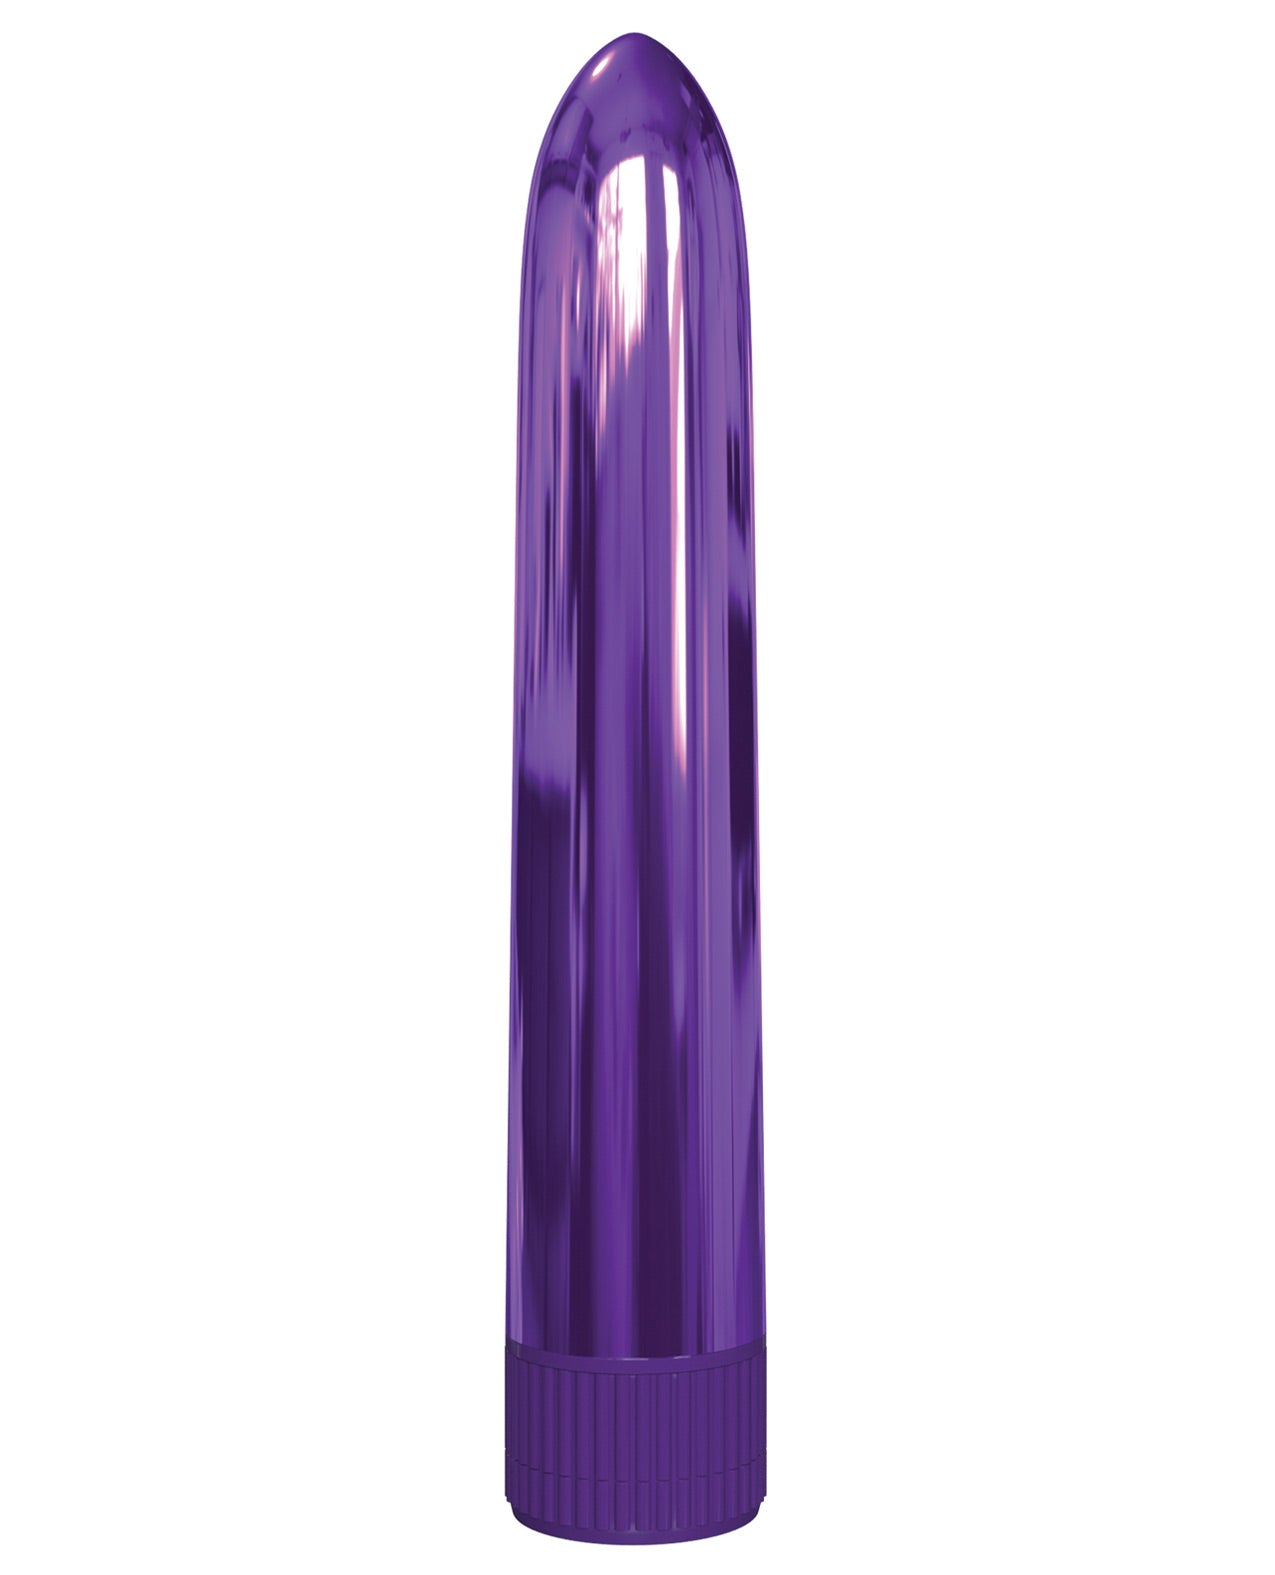 Classix 7" Metallic Vibe - Purple - LUST Depot